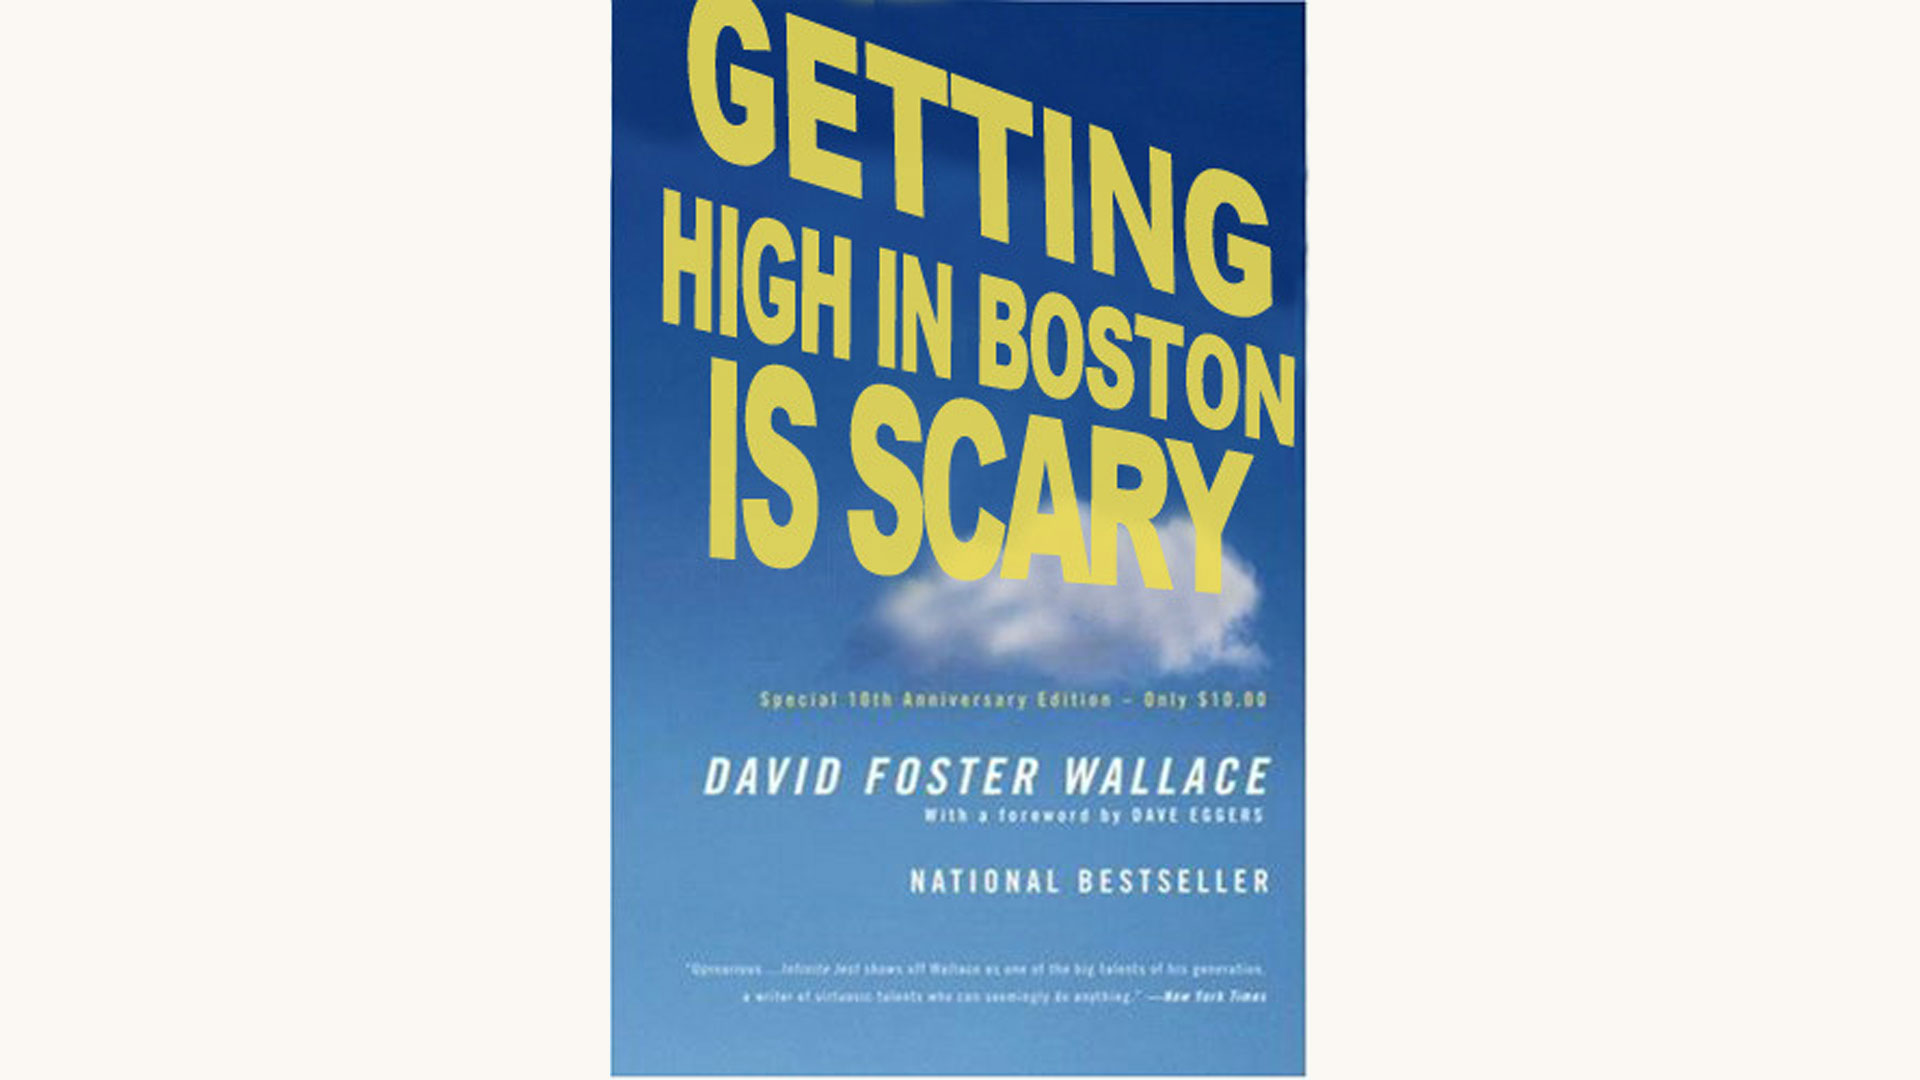 David Foster Wallace: Infinite Jest - Better Book Titles